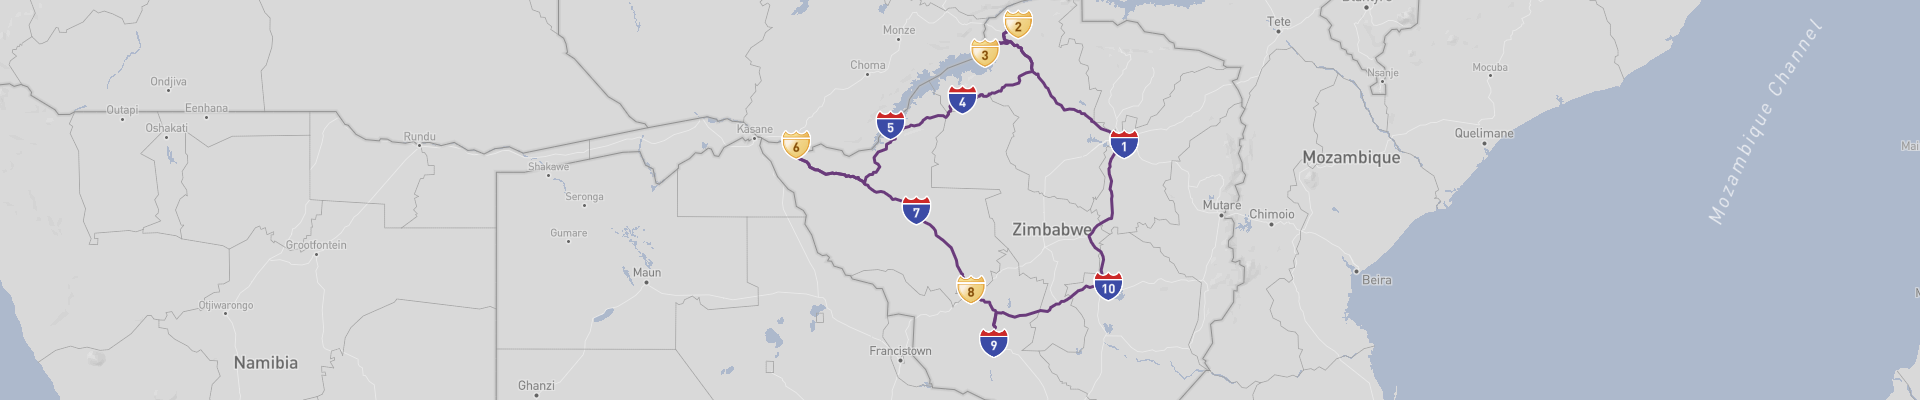 Zimbabwe Road Trip